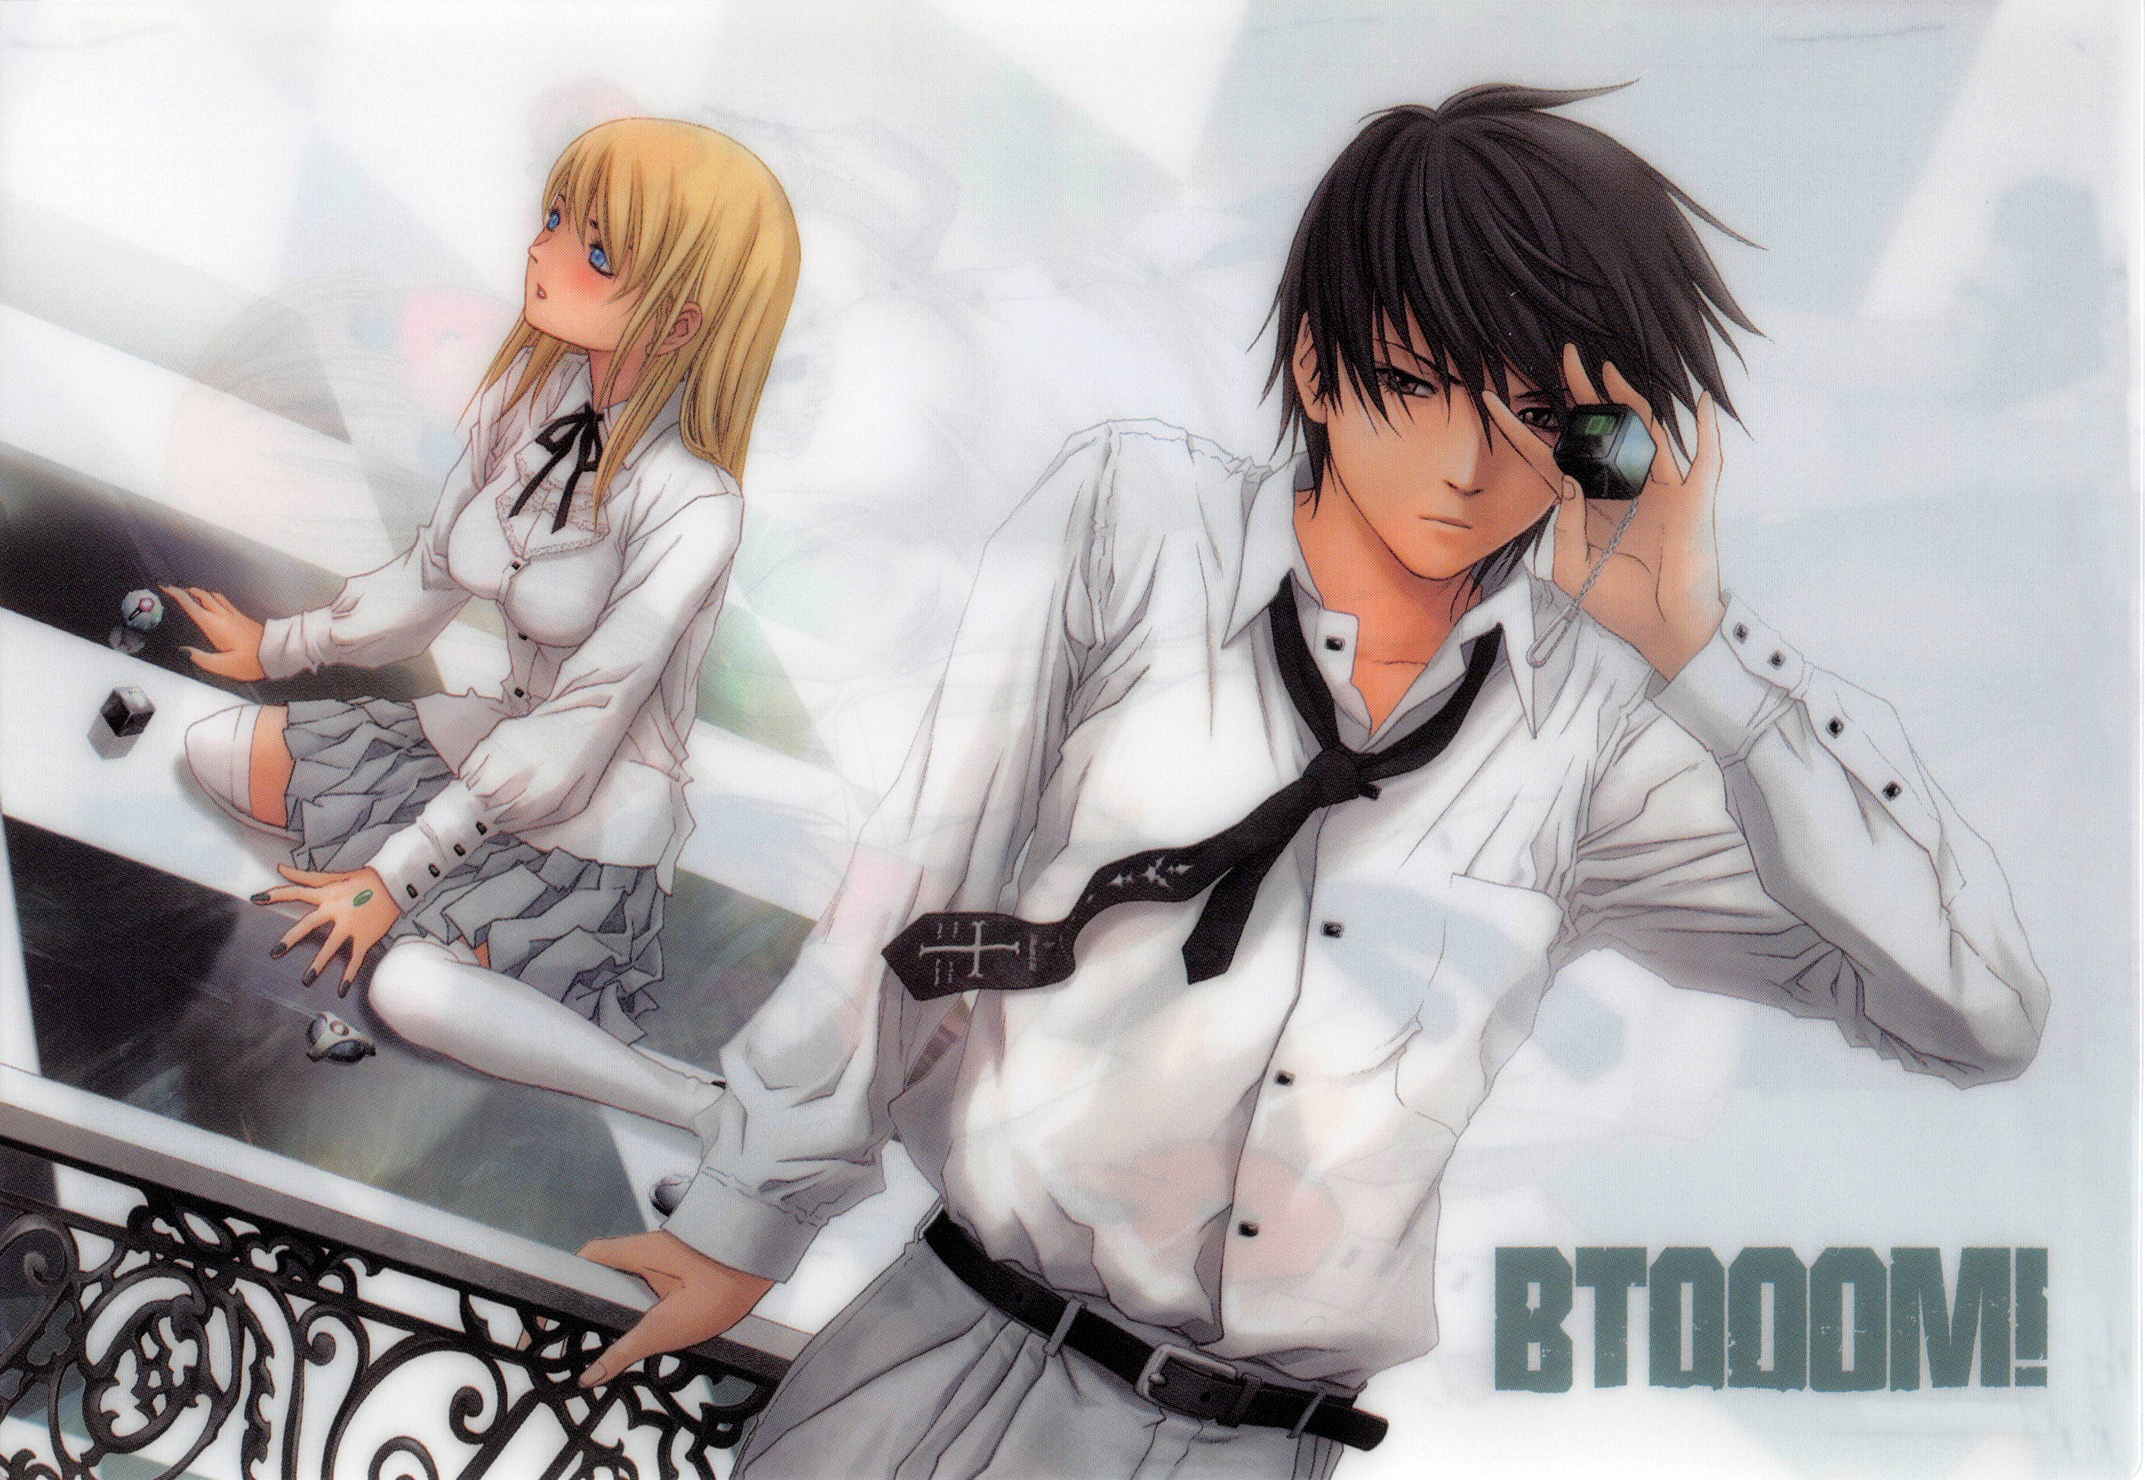 Anime Btooom! HD Wallpaper | Background Image